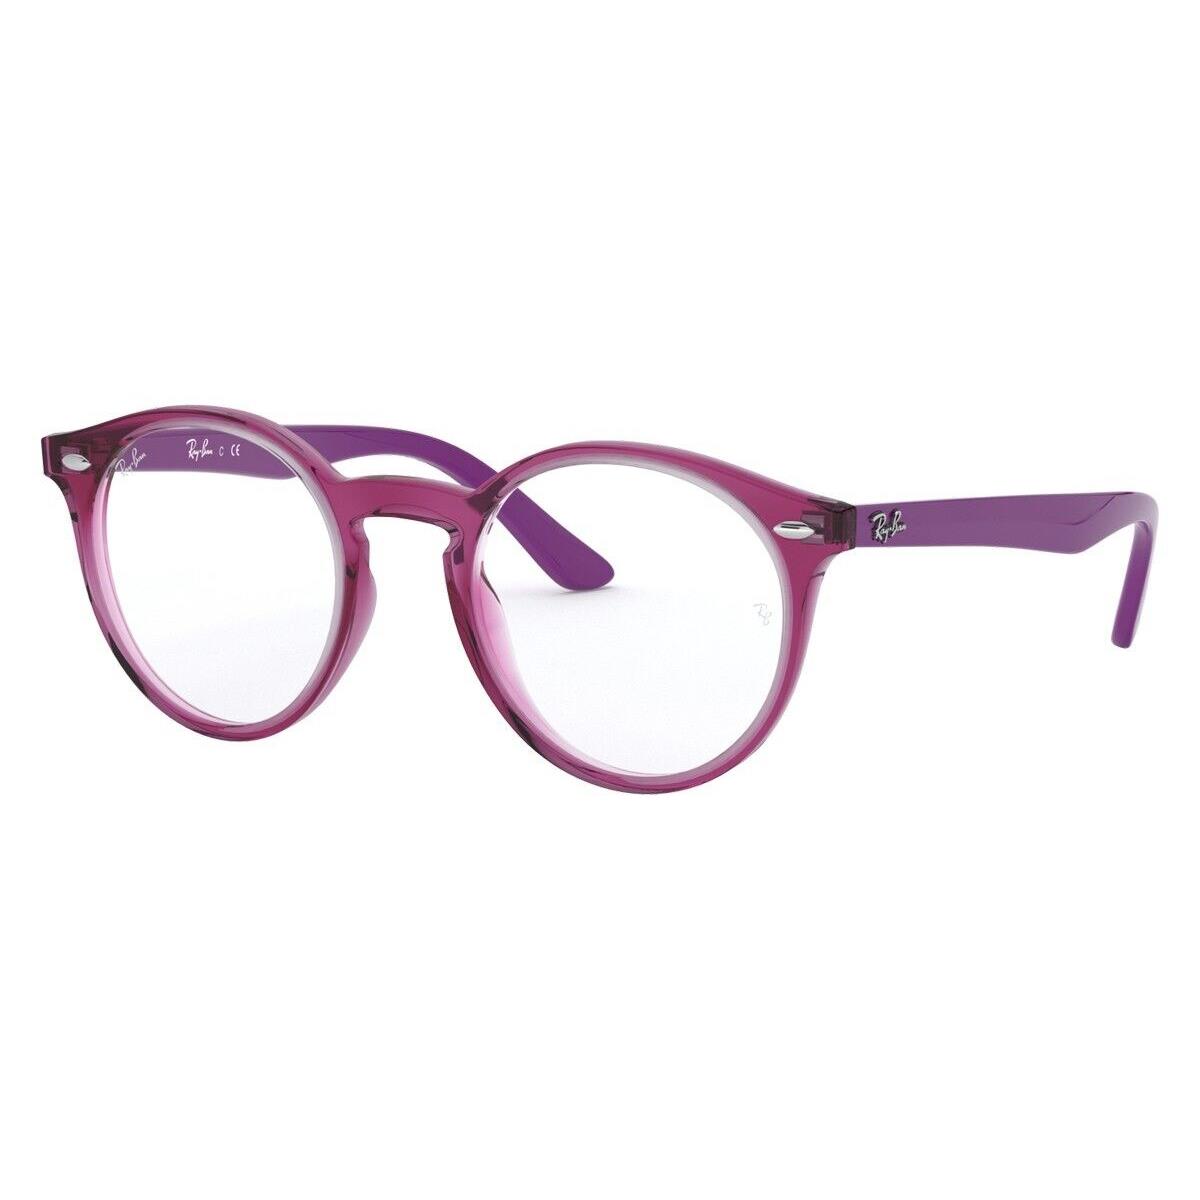 Ray-ban 0RY1594 Eyeglasses Kids Purple Oval 44mm